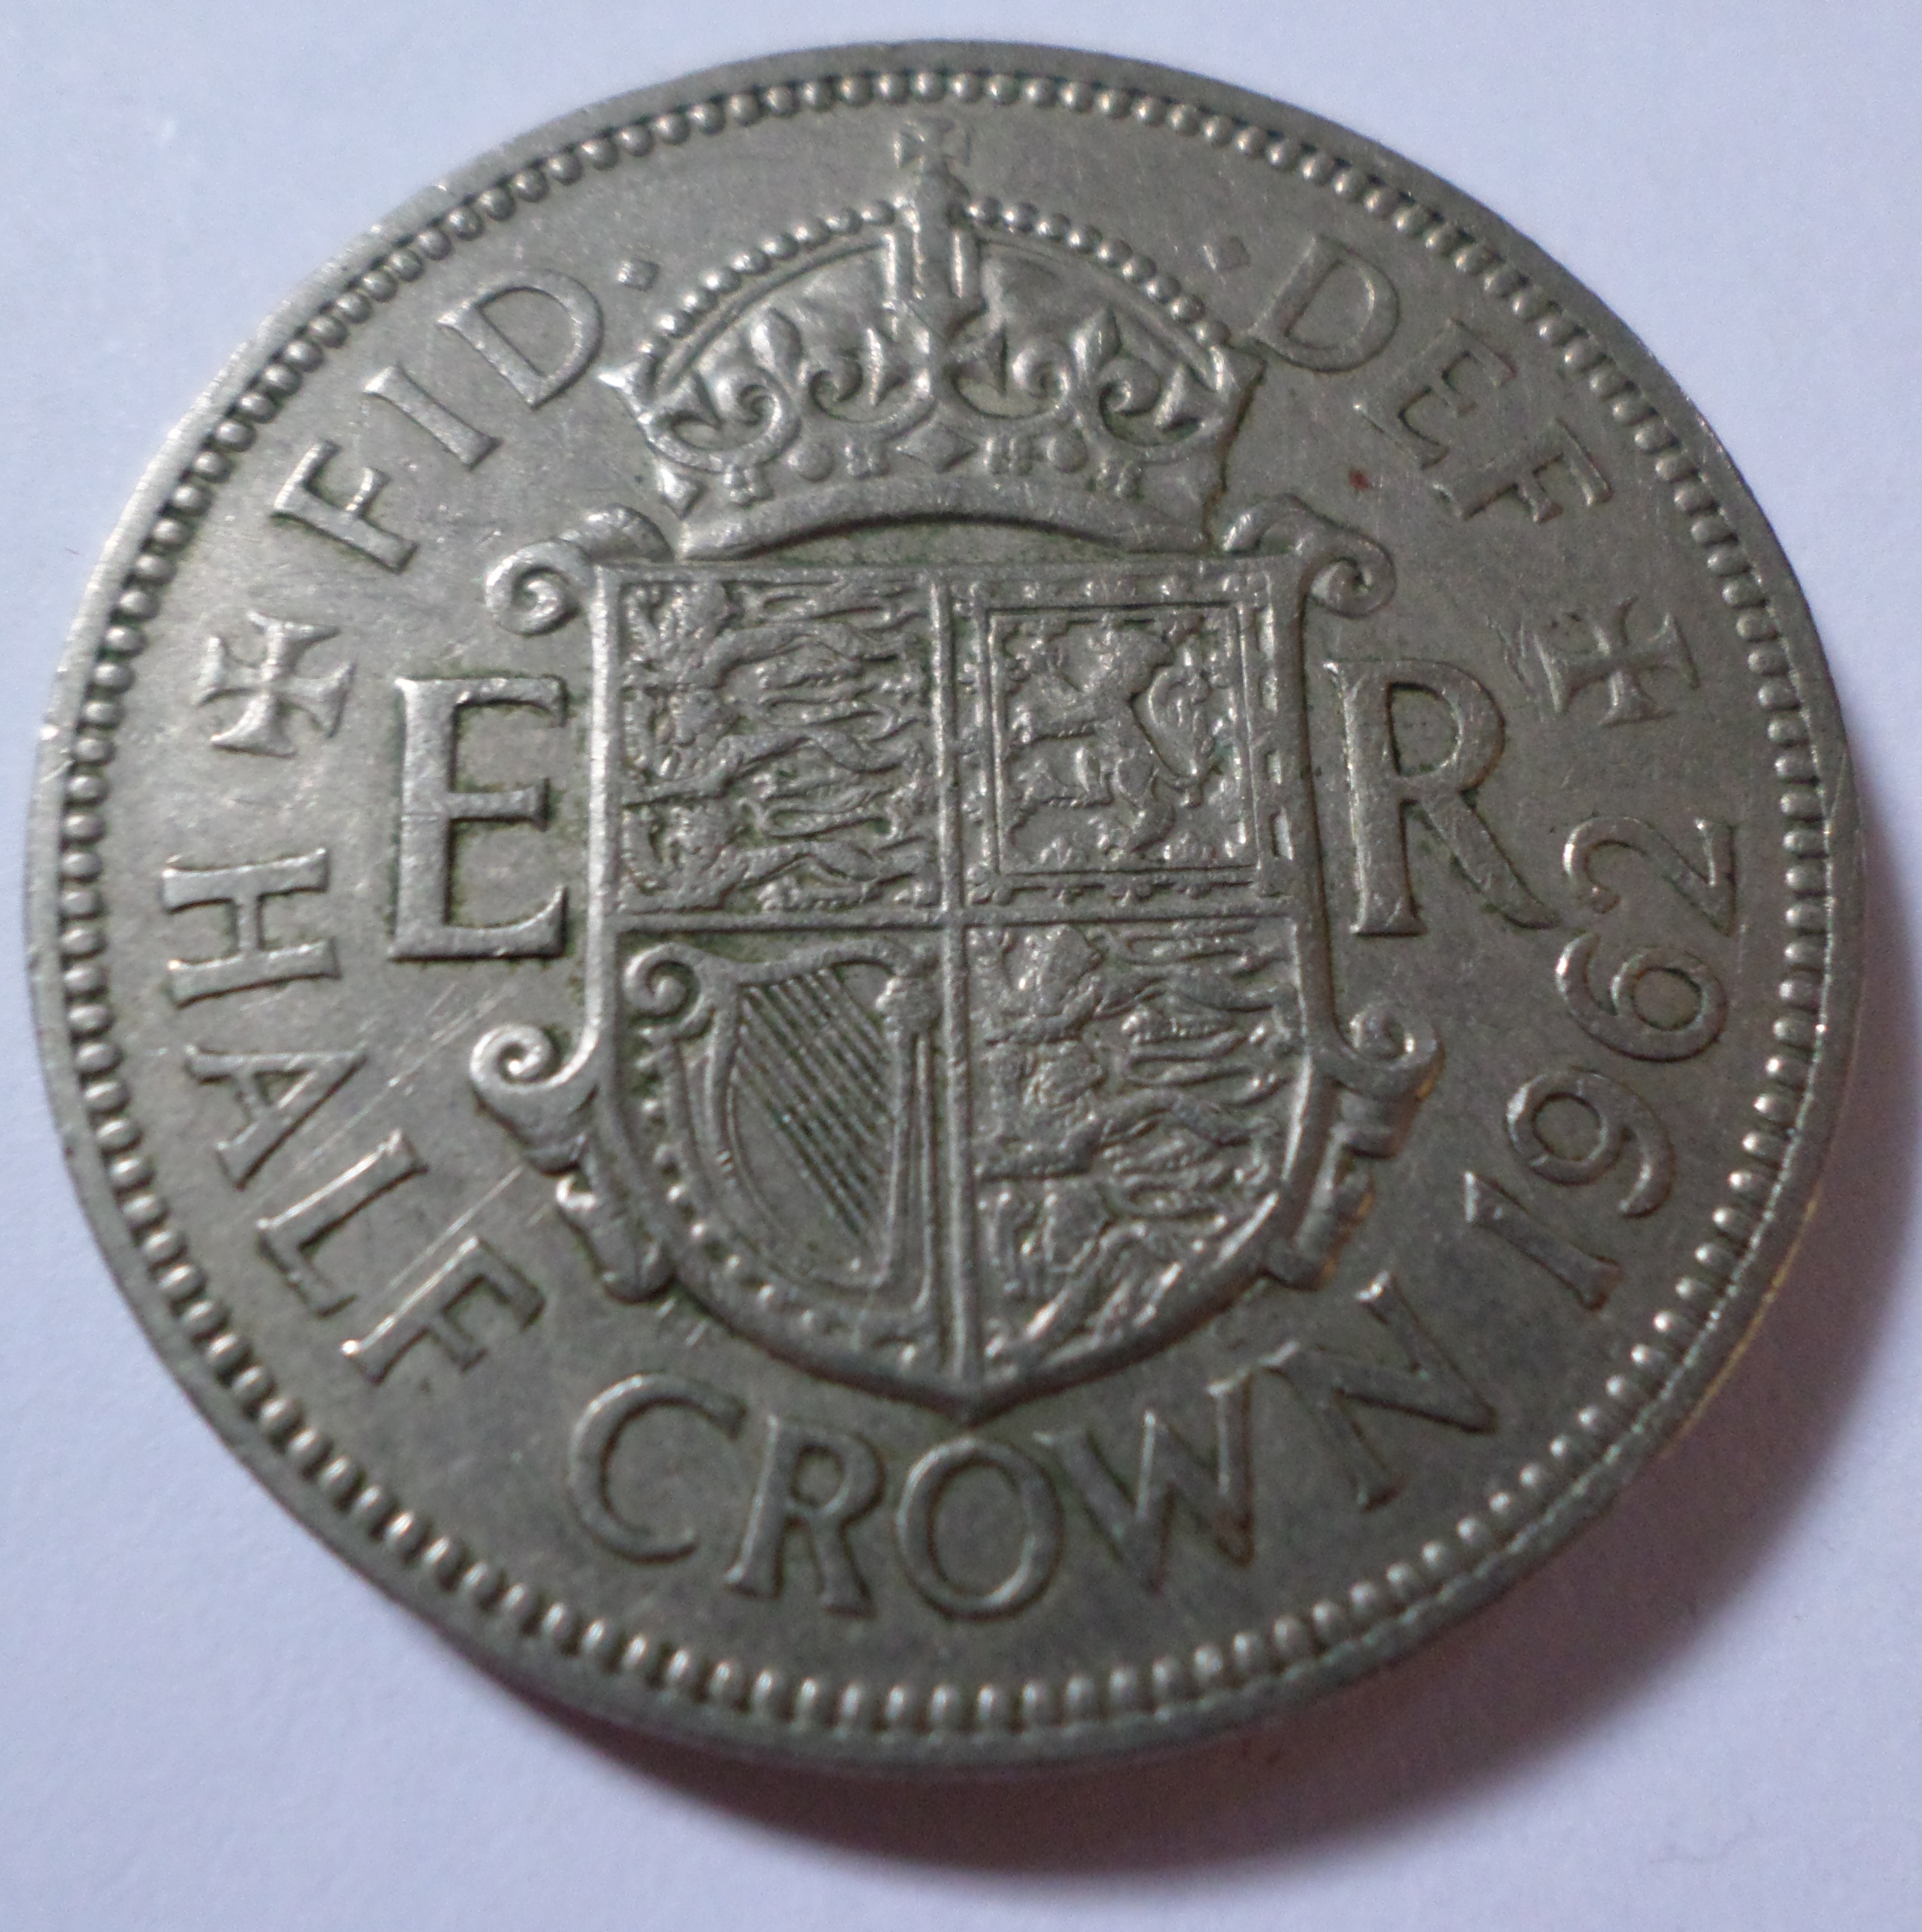 1962 half crown coin photo